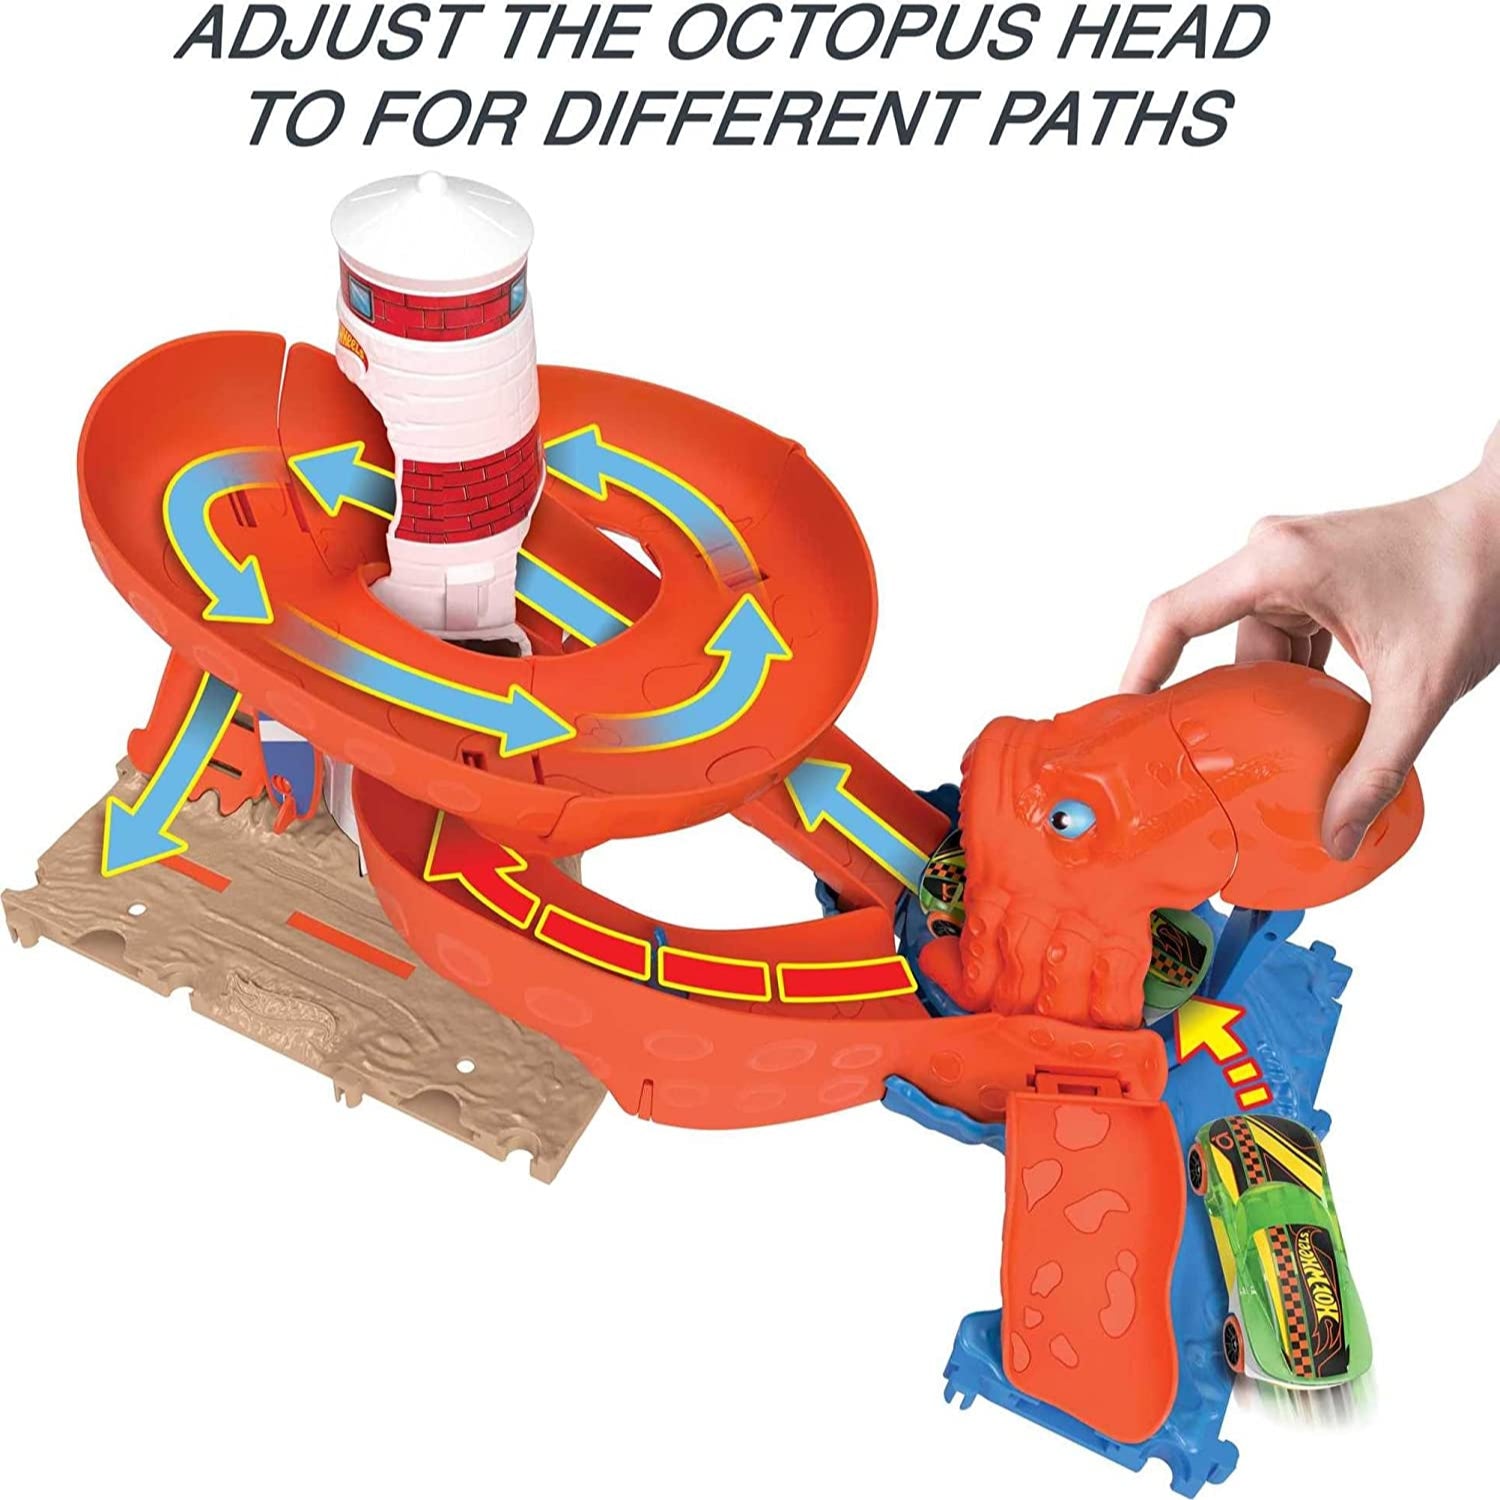 Hot Wheels Color Shifters Playset Octo Battle - Mattel 